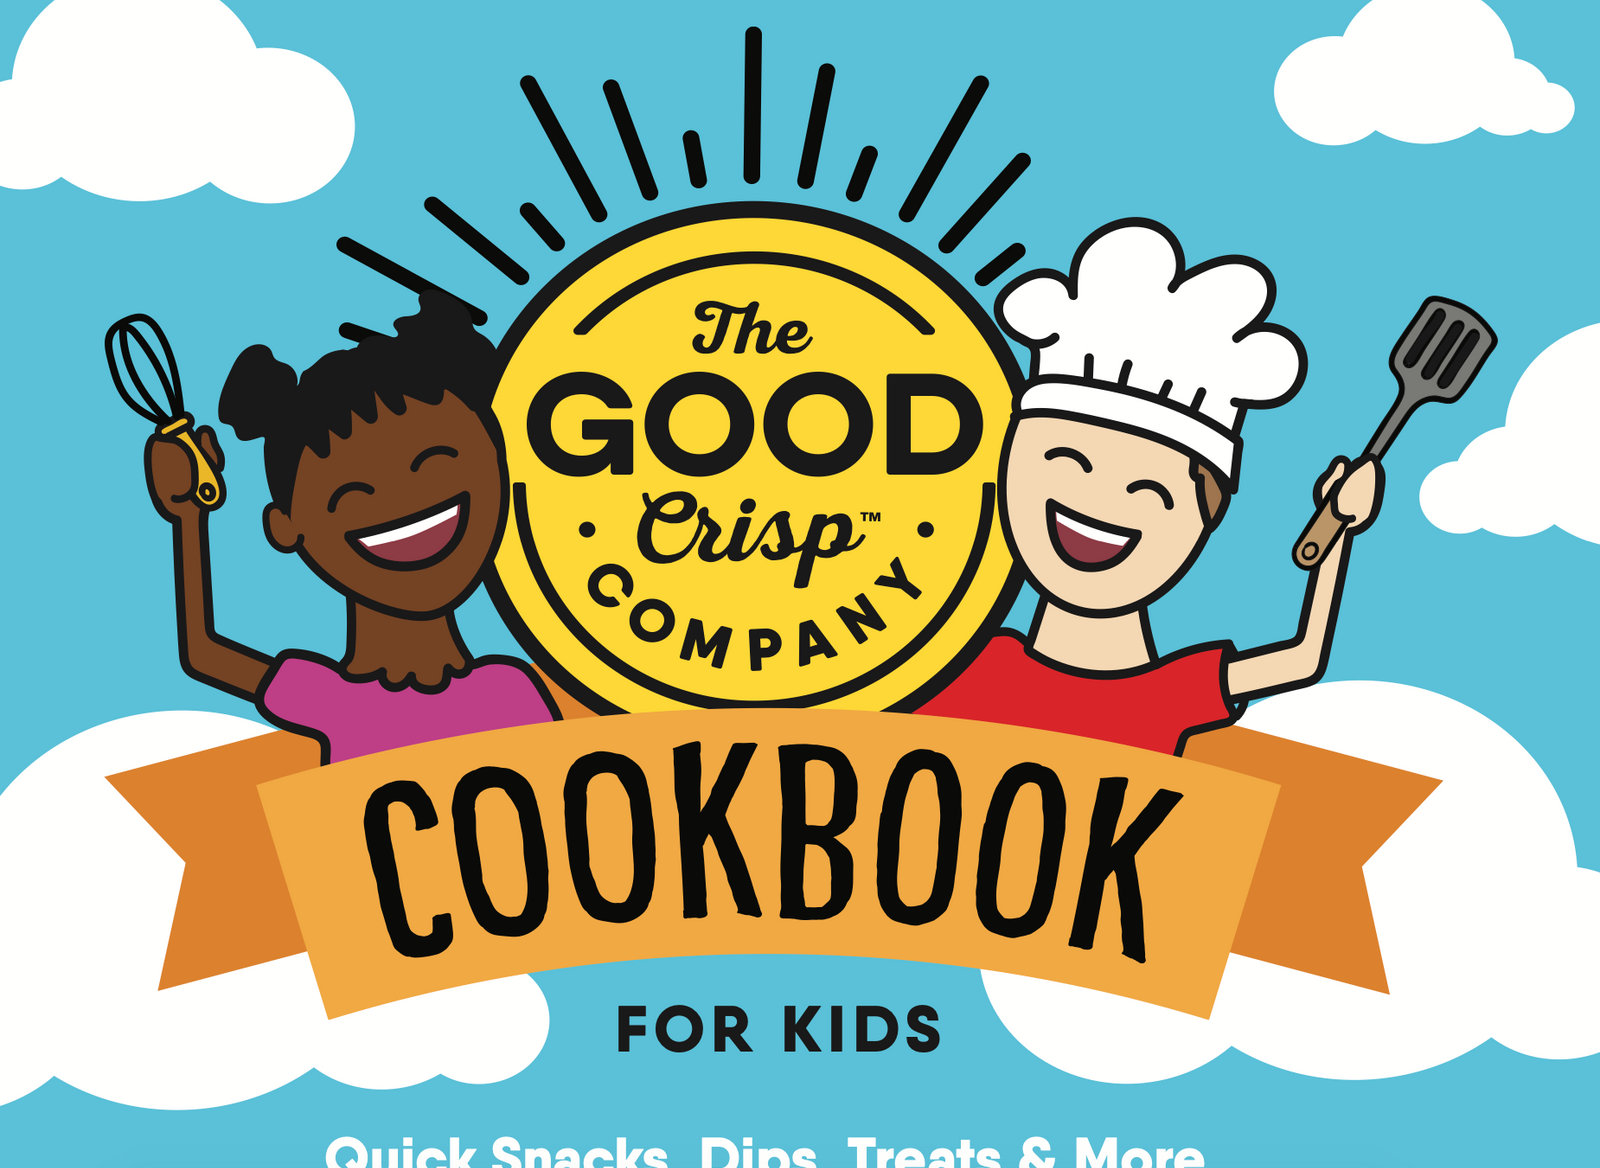 The Good Crisp Company Cookbook for Kids. Quick Snacks, Dips, Treats & More